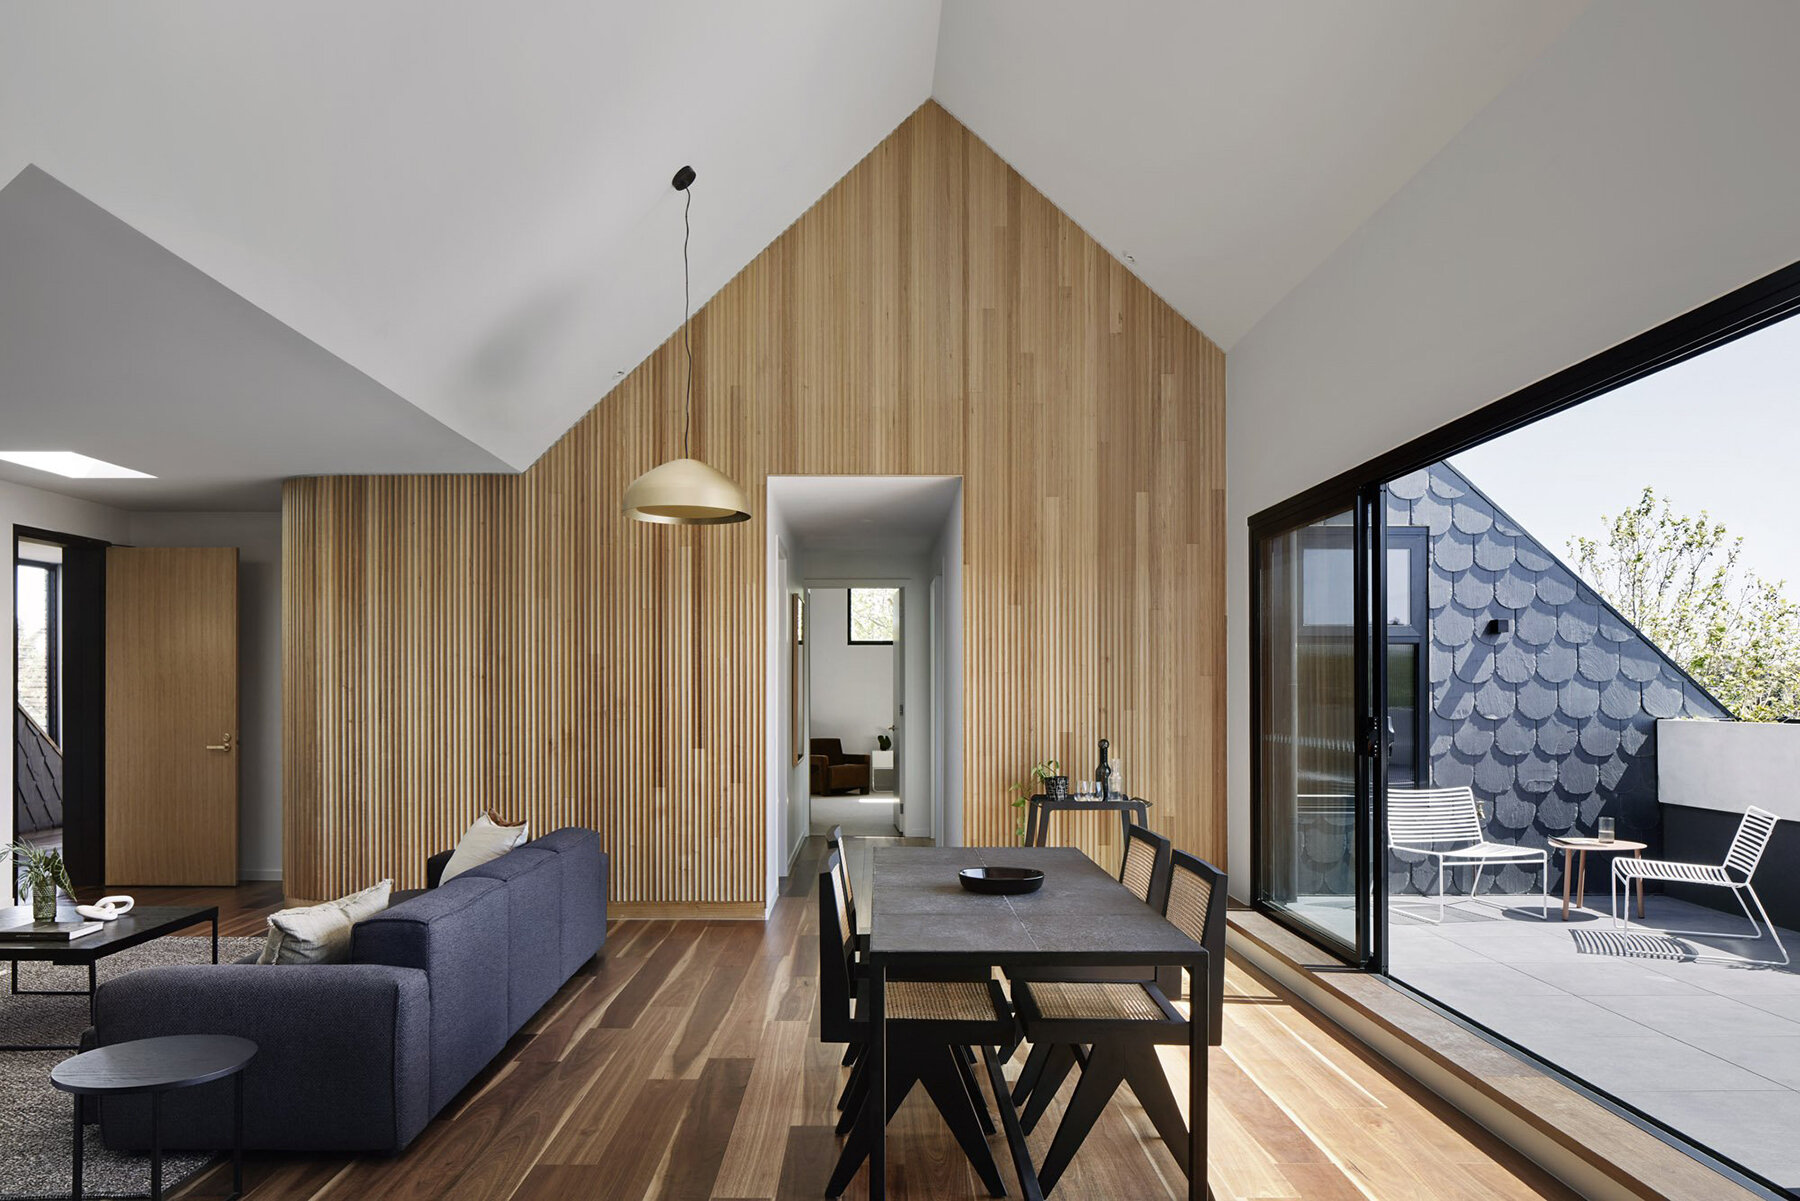 austin-maynard-architects-slate-house-australia-designboom-06a